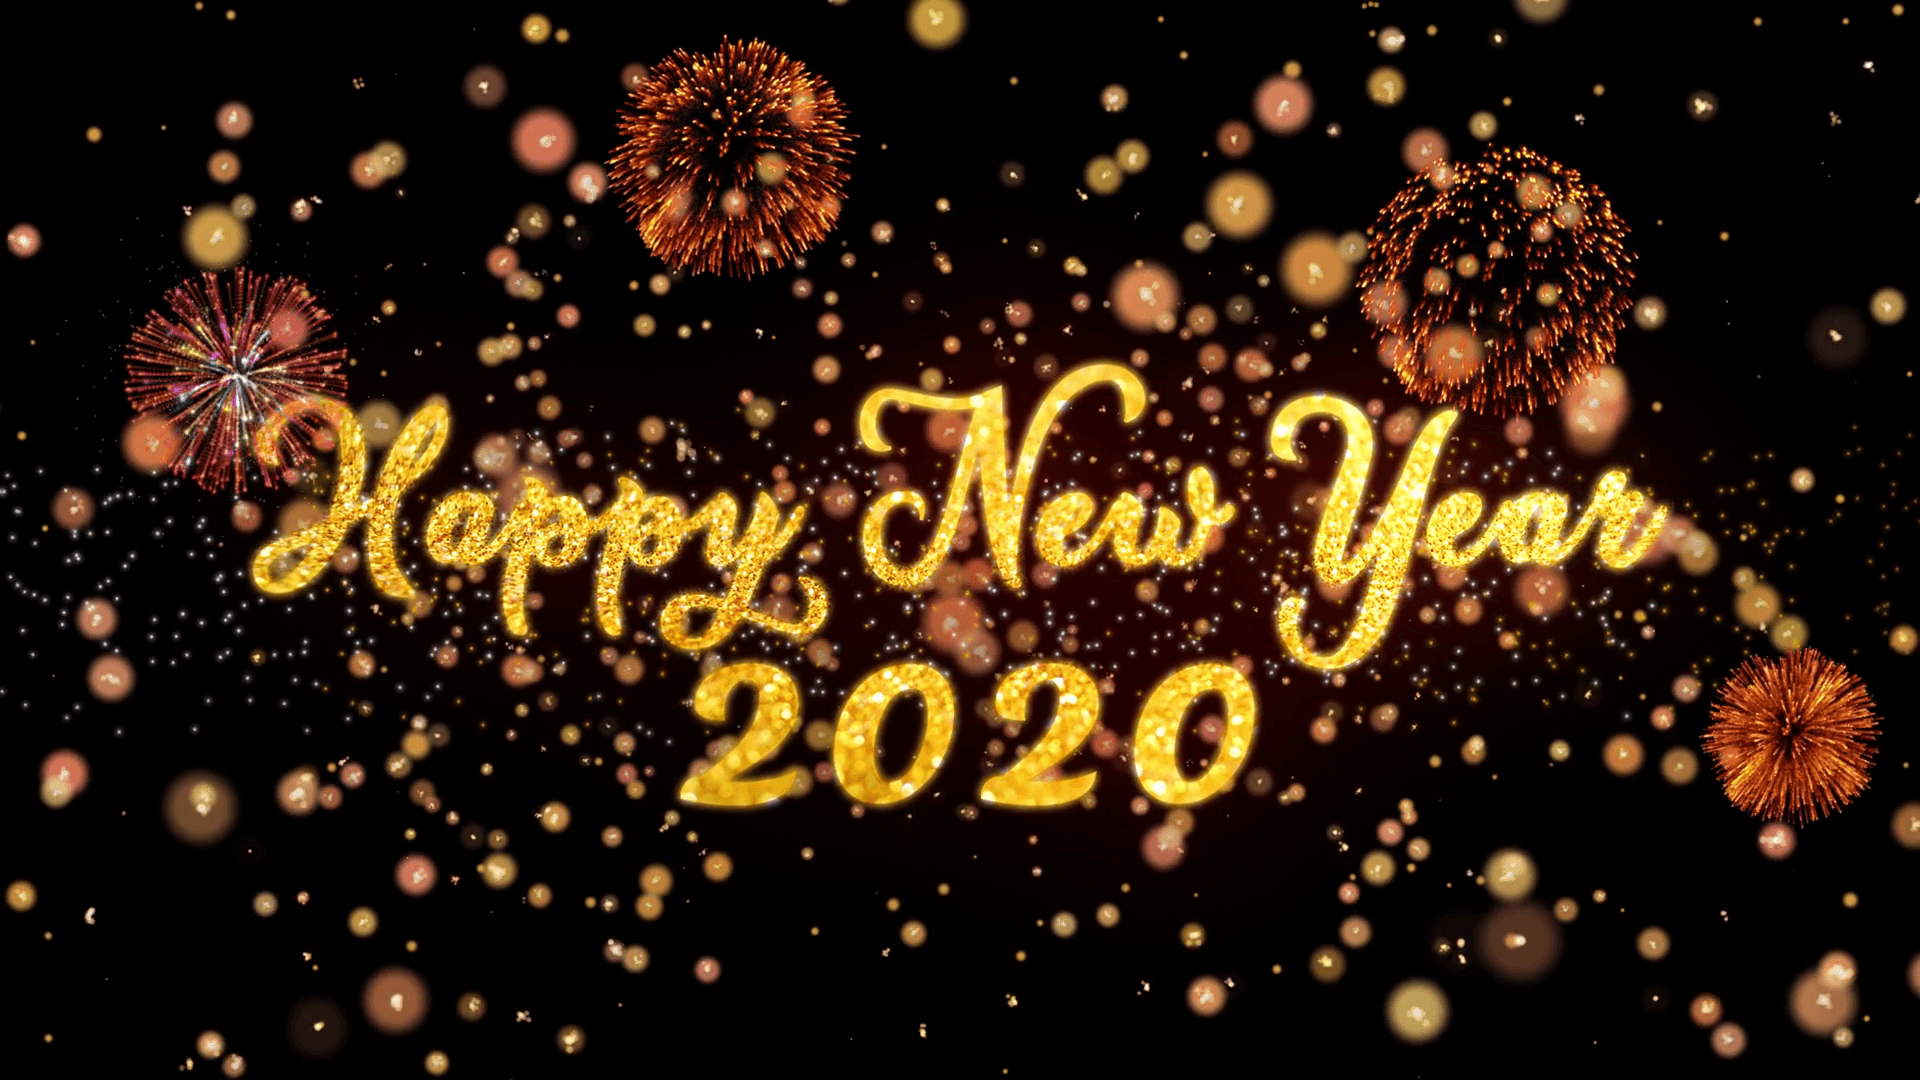 Happy New Year 2020 Wallpaper Download, Full HD, 3D Wallpaper